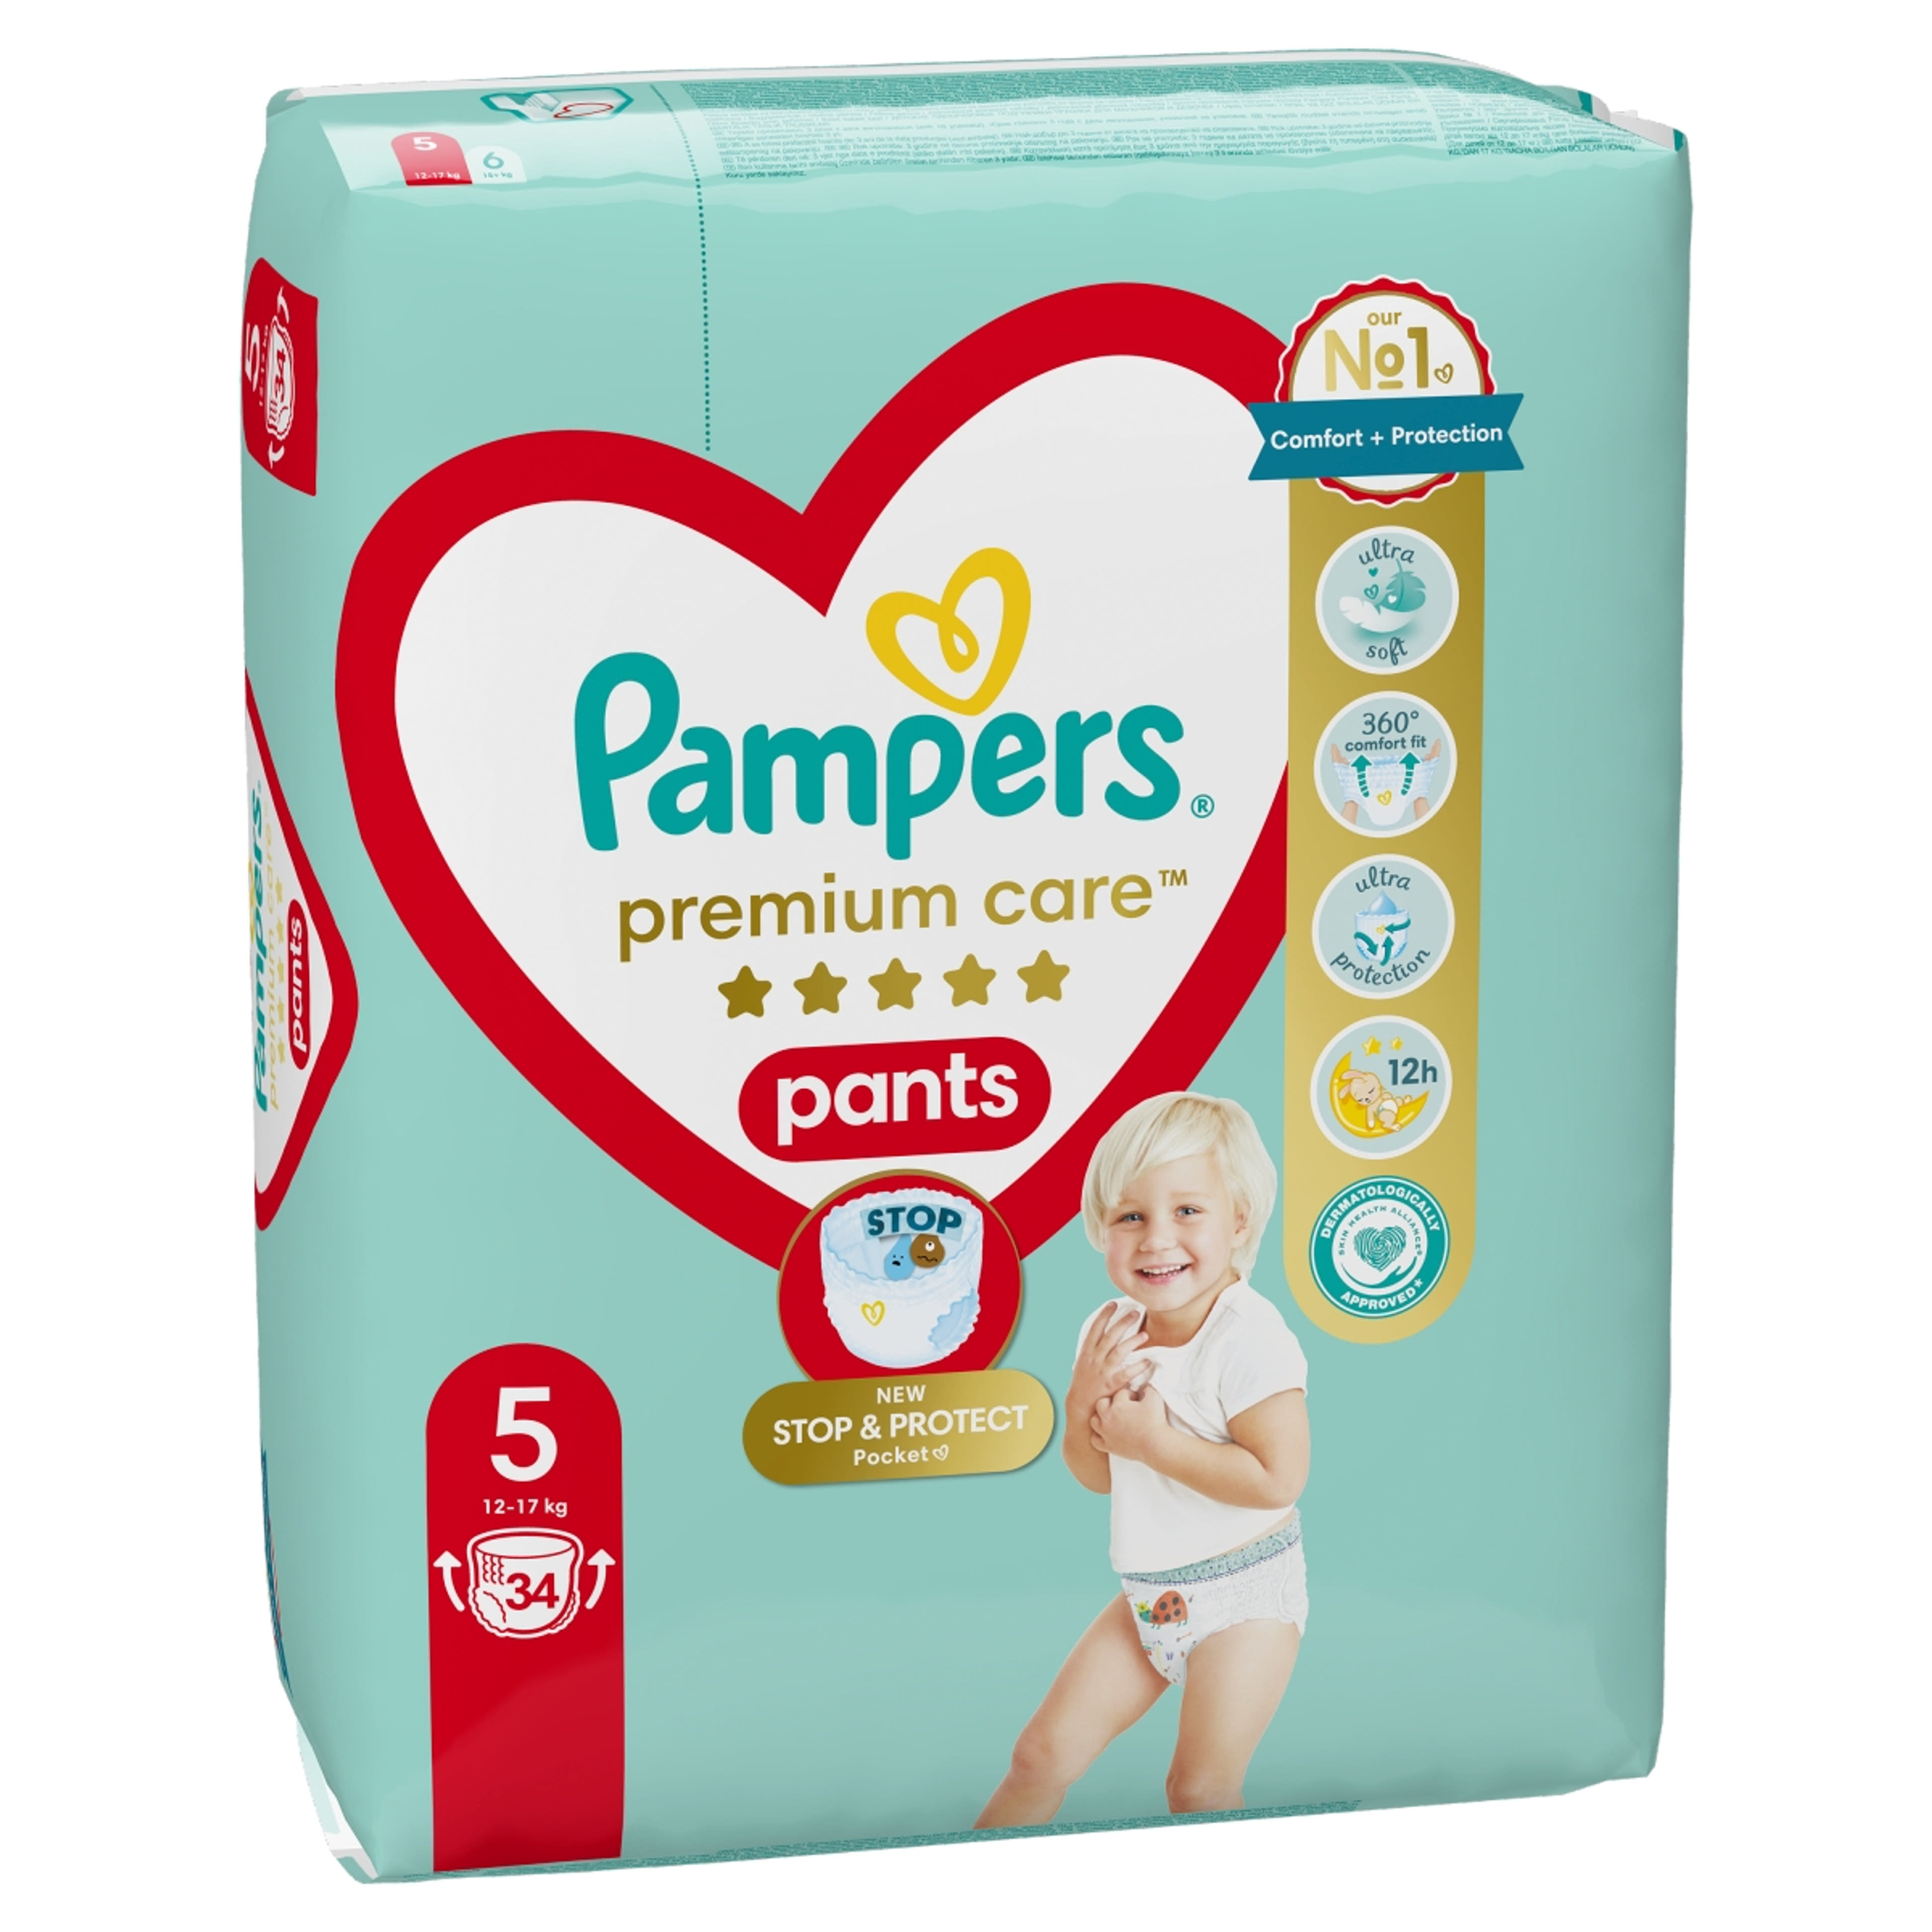 Pampers Premium Care Pants 5-ös 12-17kg - 34 db